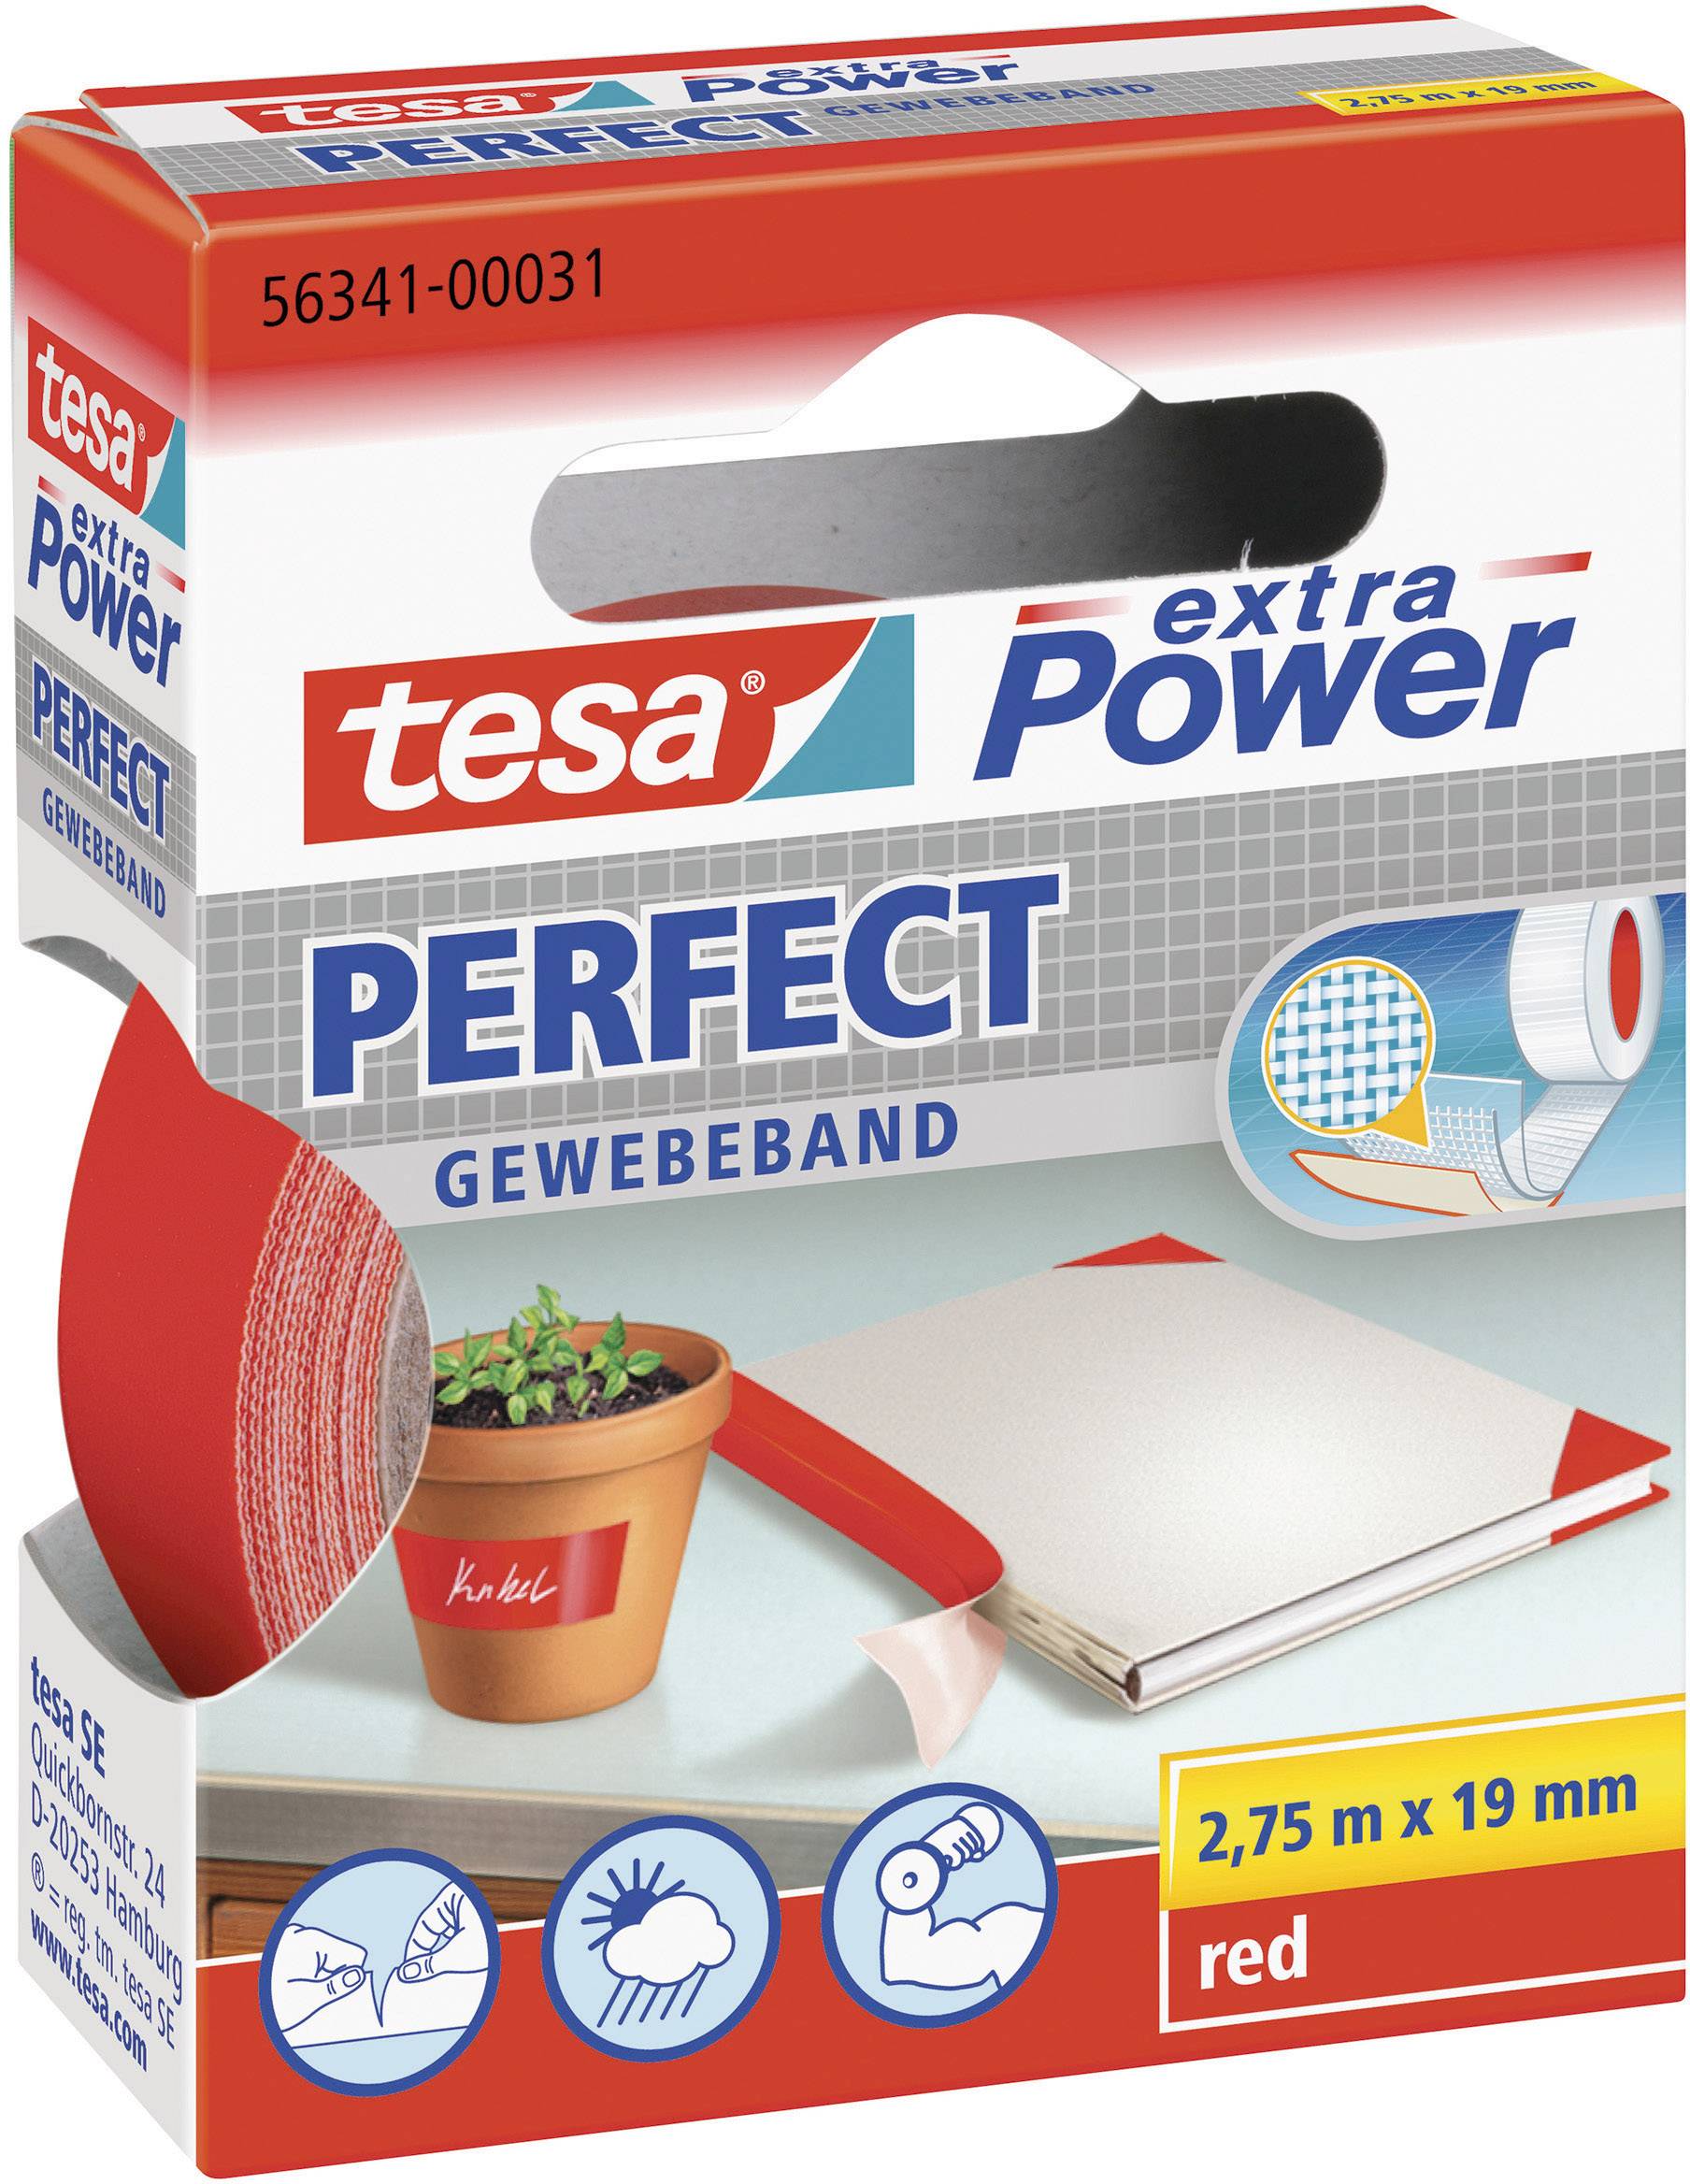 TESA extra Power Perfect Gewebeband 2,75m 19mm rot